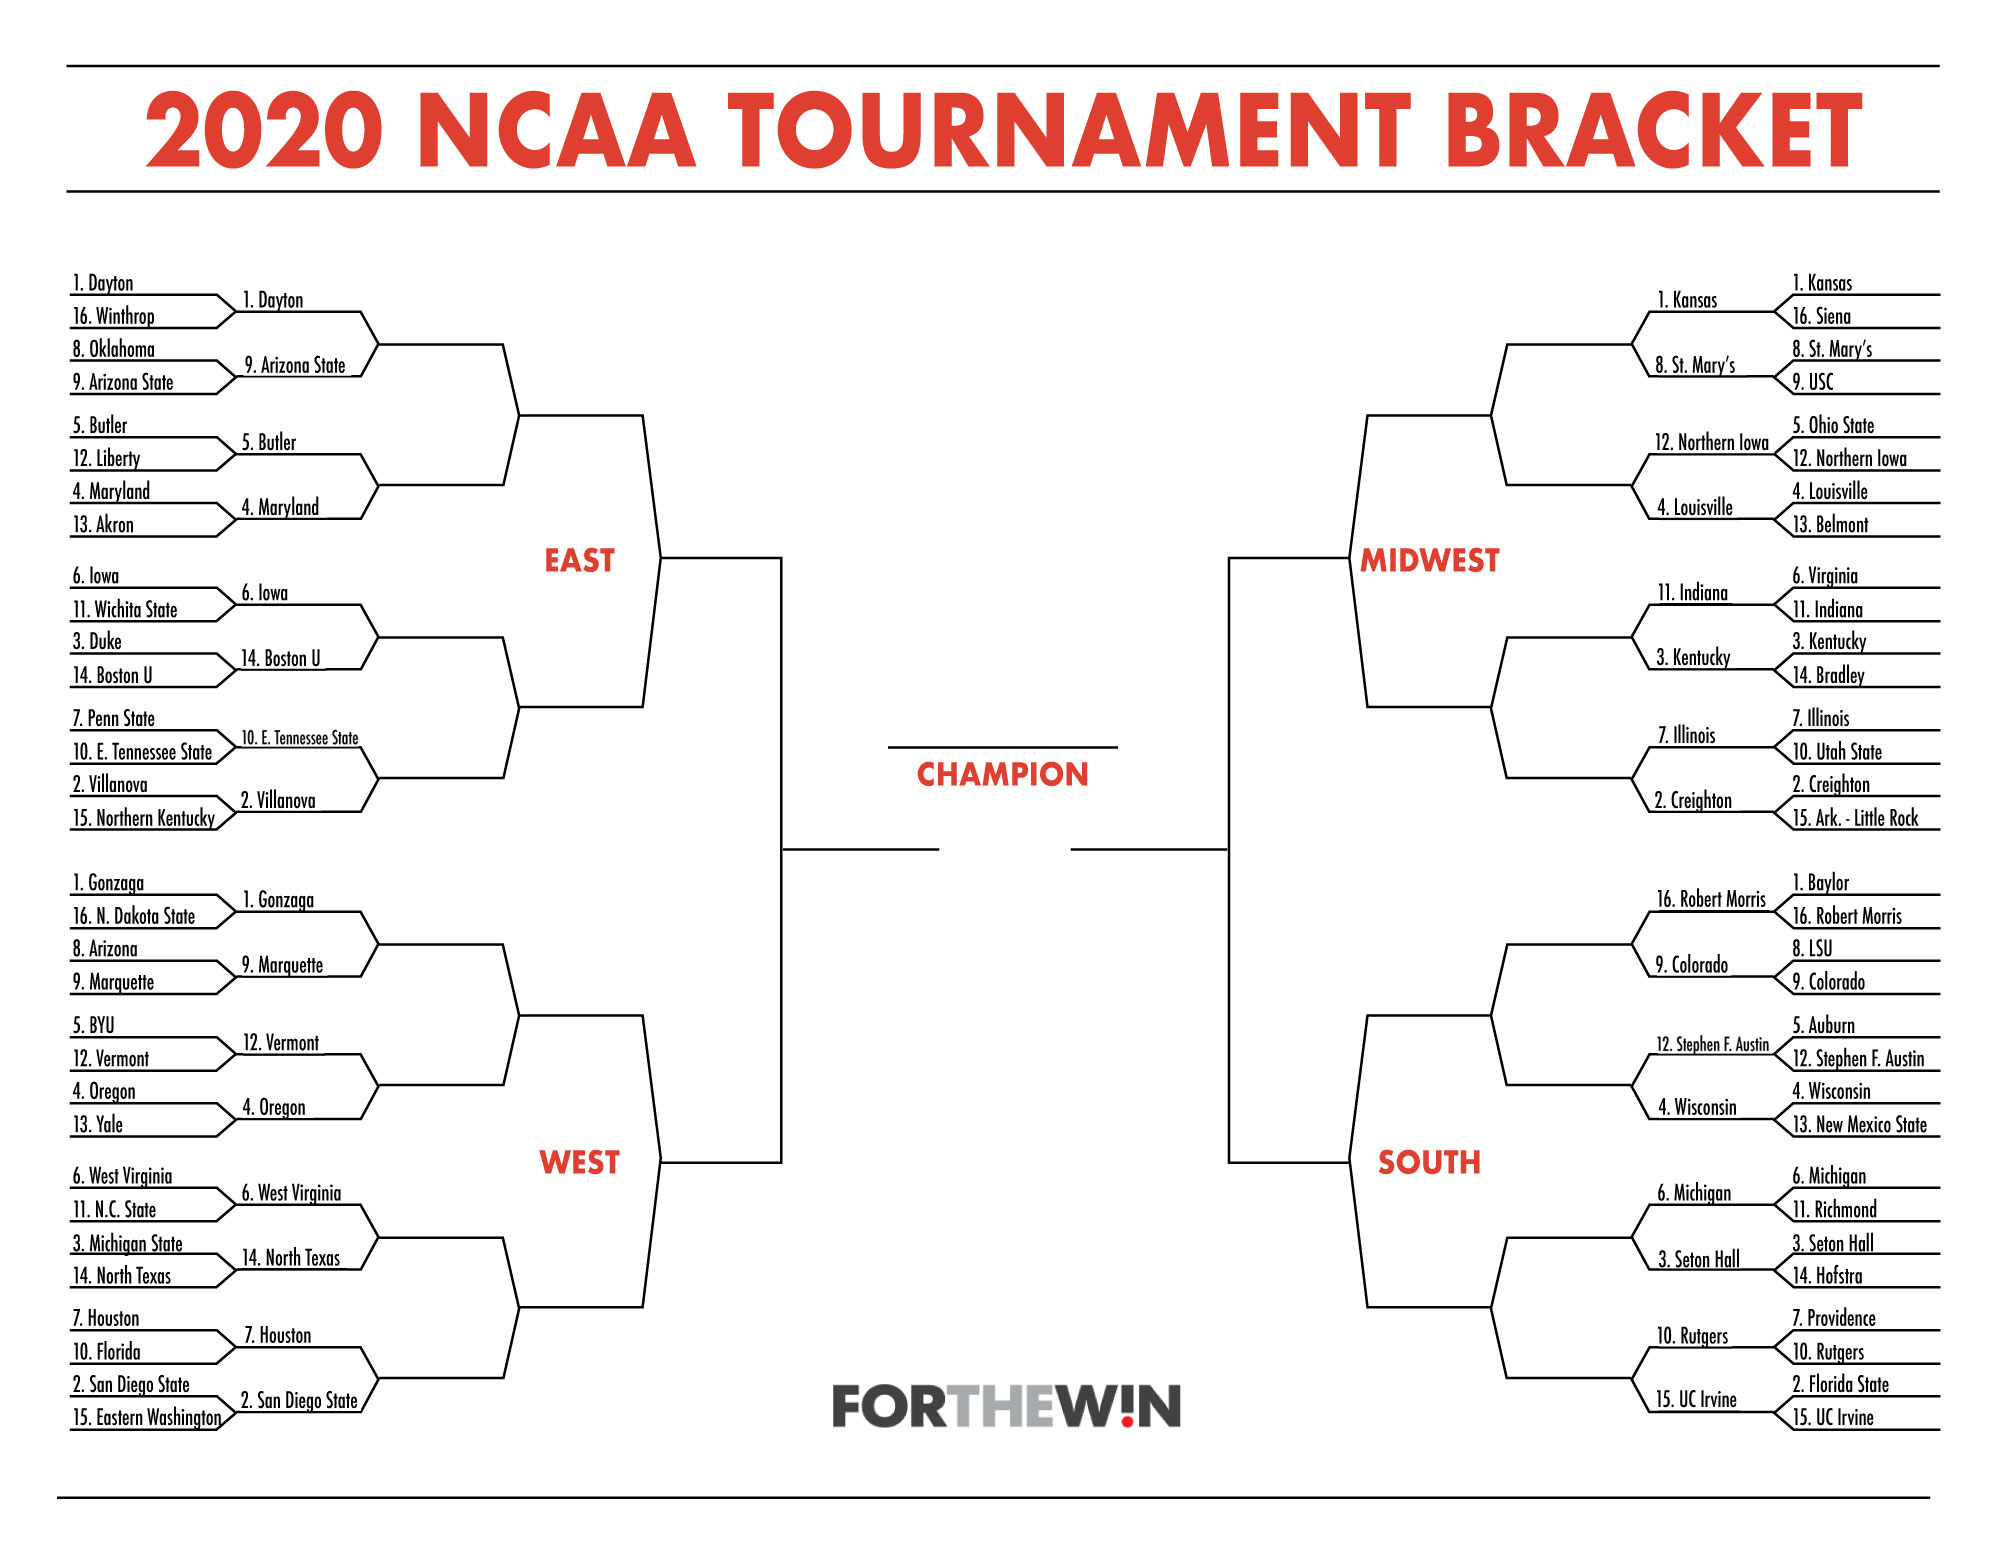 2020 NCAA Tournament Bracket Vote in the second round!